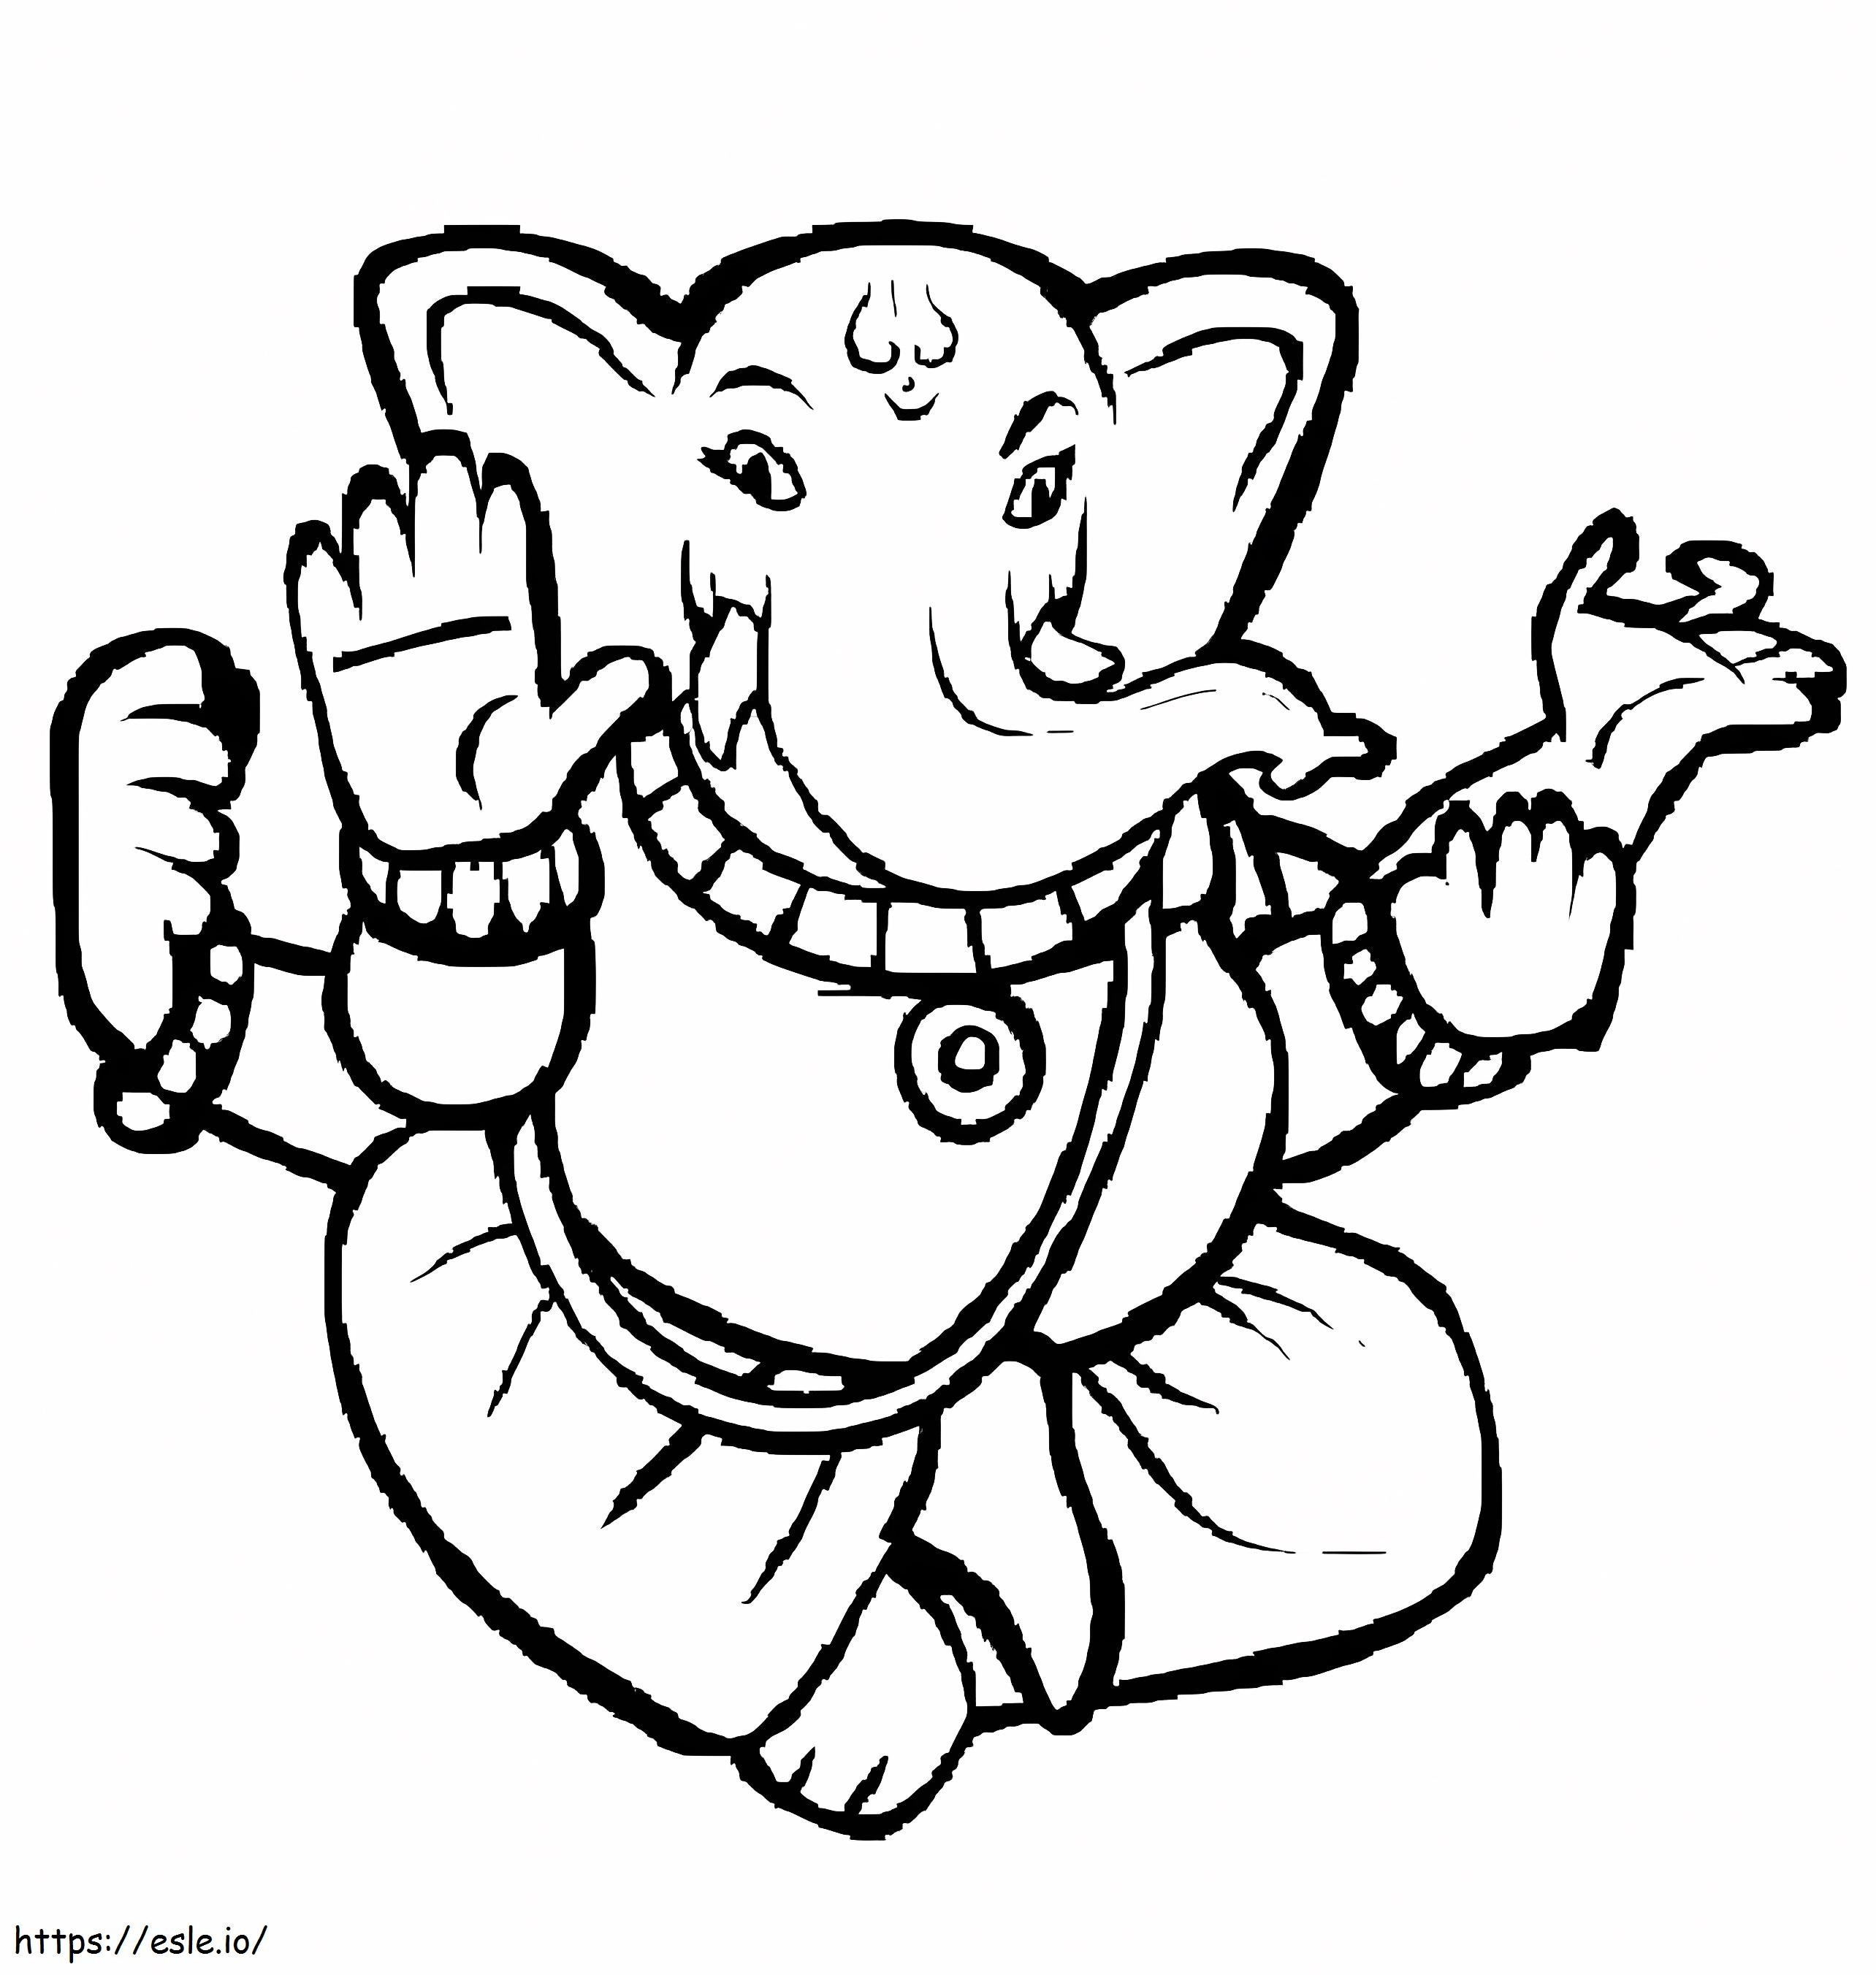 Ganesha Hindoegod kleurplaat kleurplaat